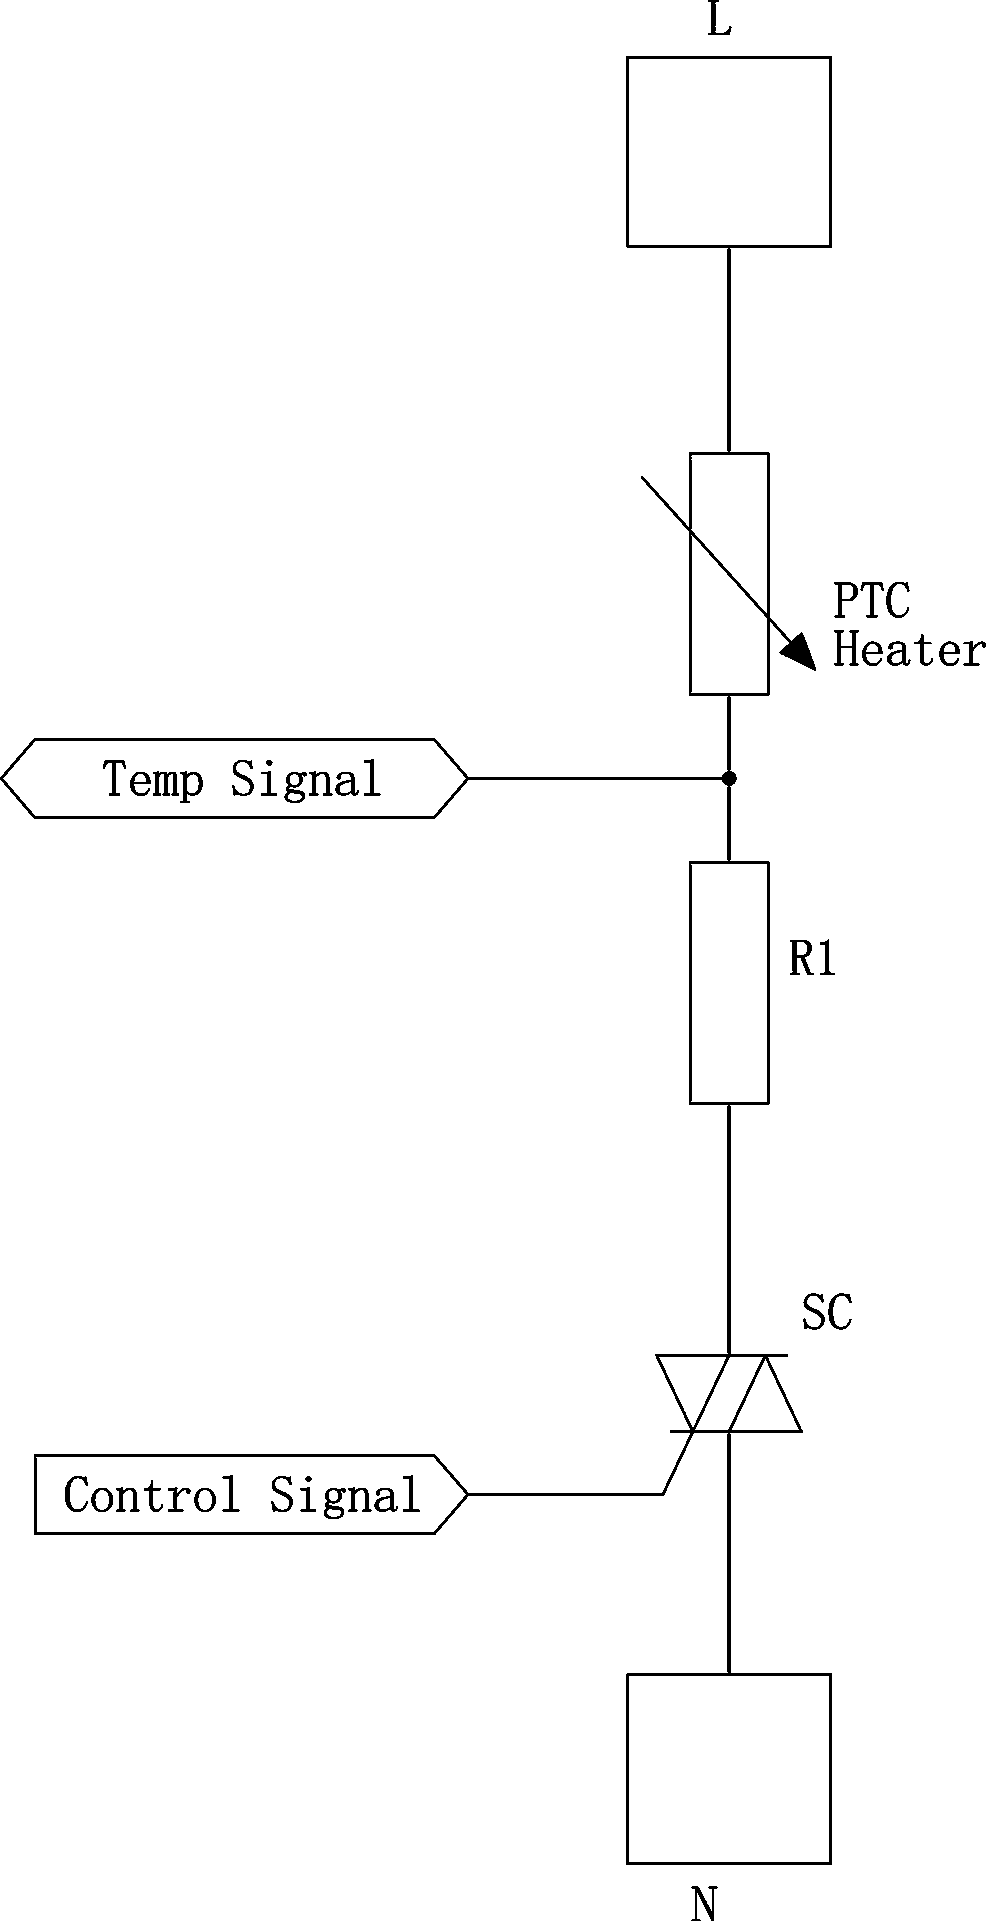 Dry burning judgment method applied to PTC heating equipment